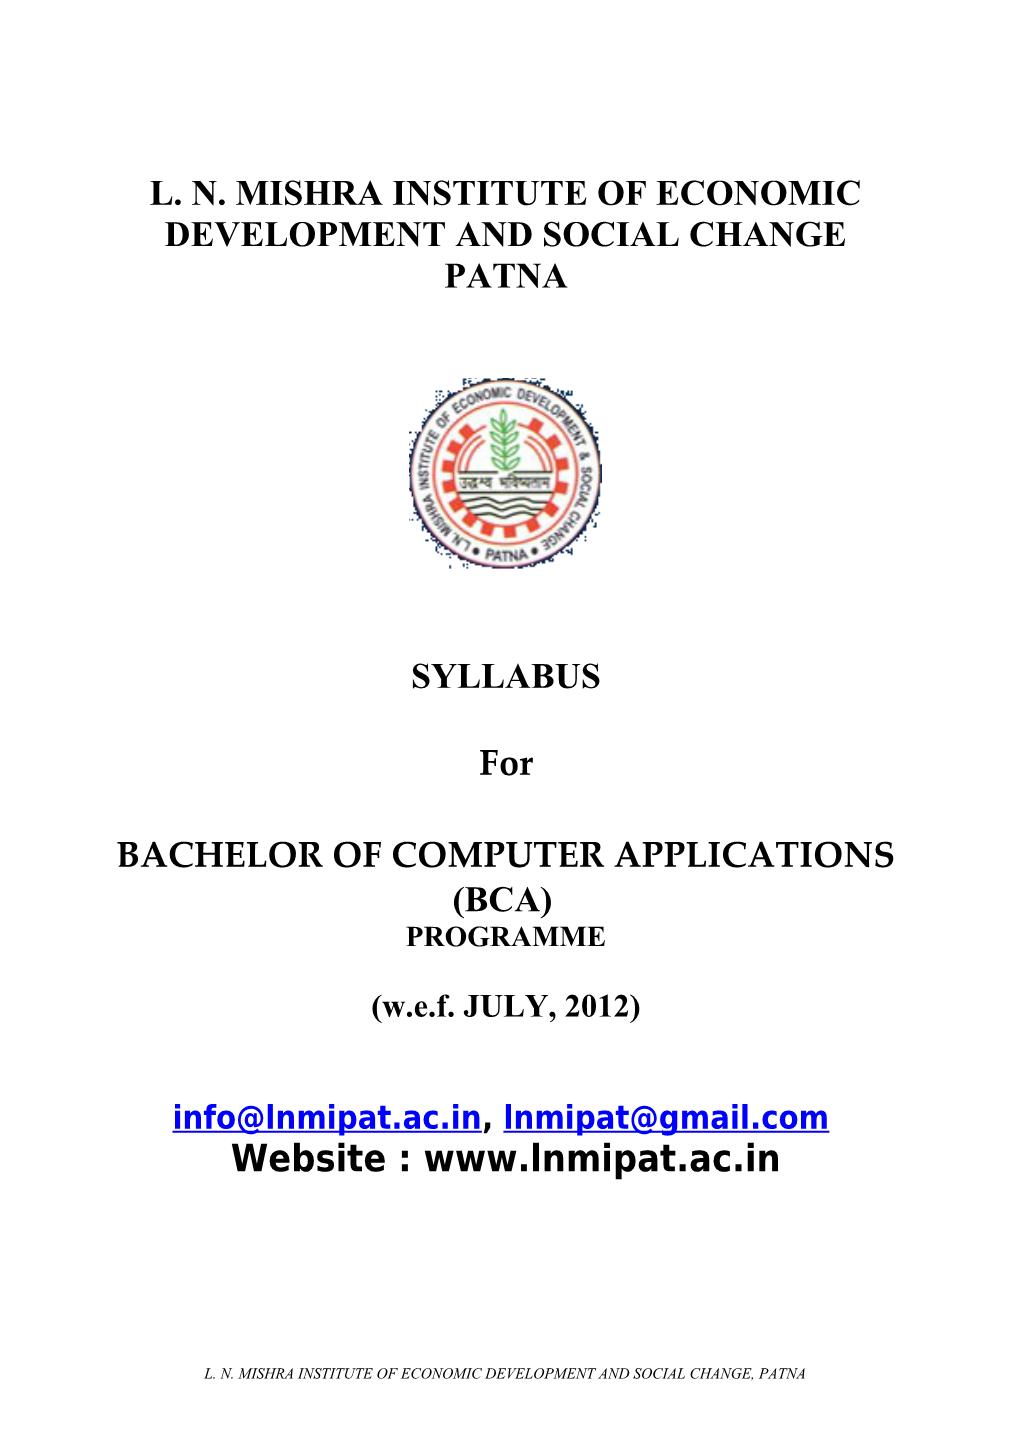 L. N. Mishra Institute of Economic Development and Social Change Patna